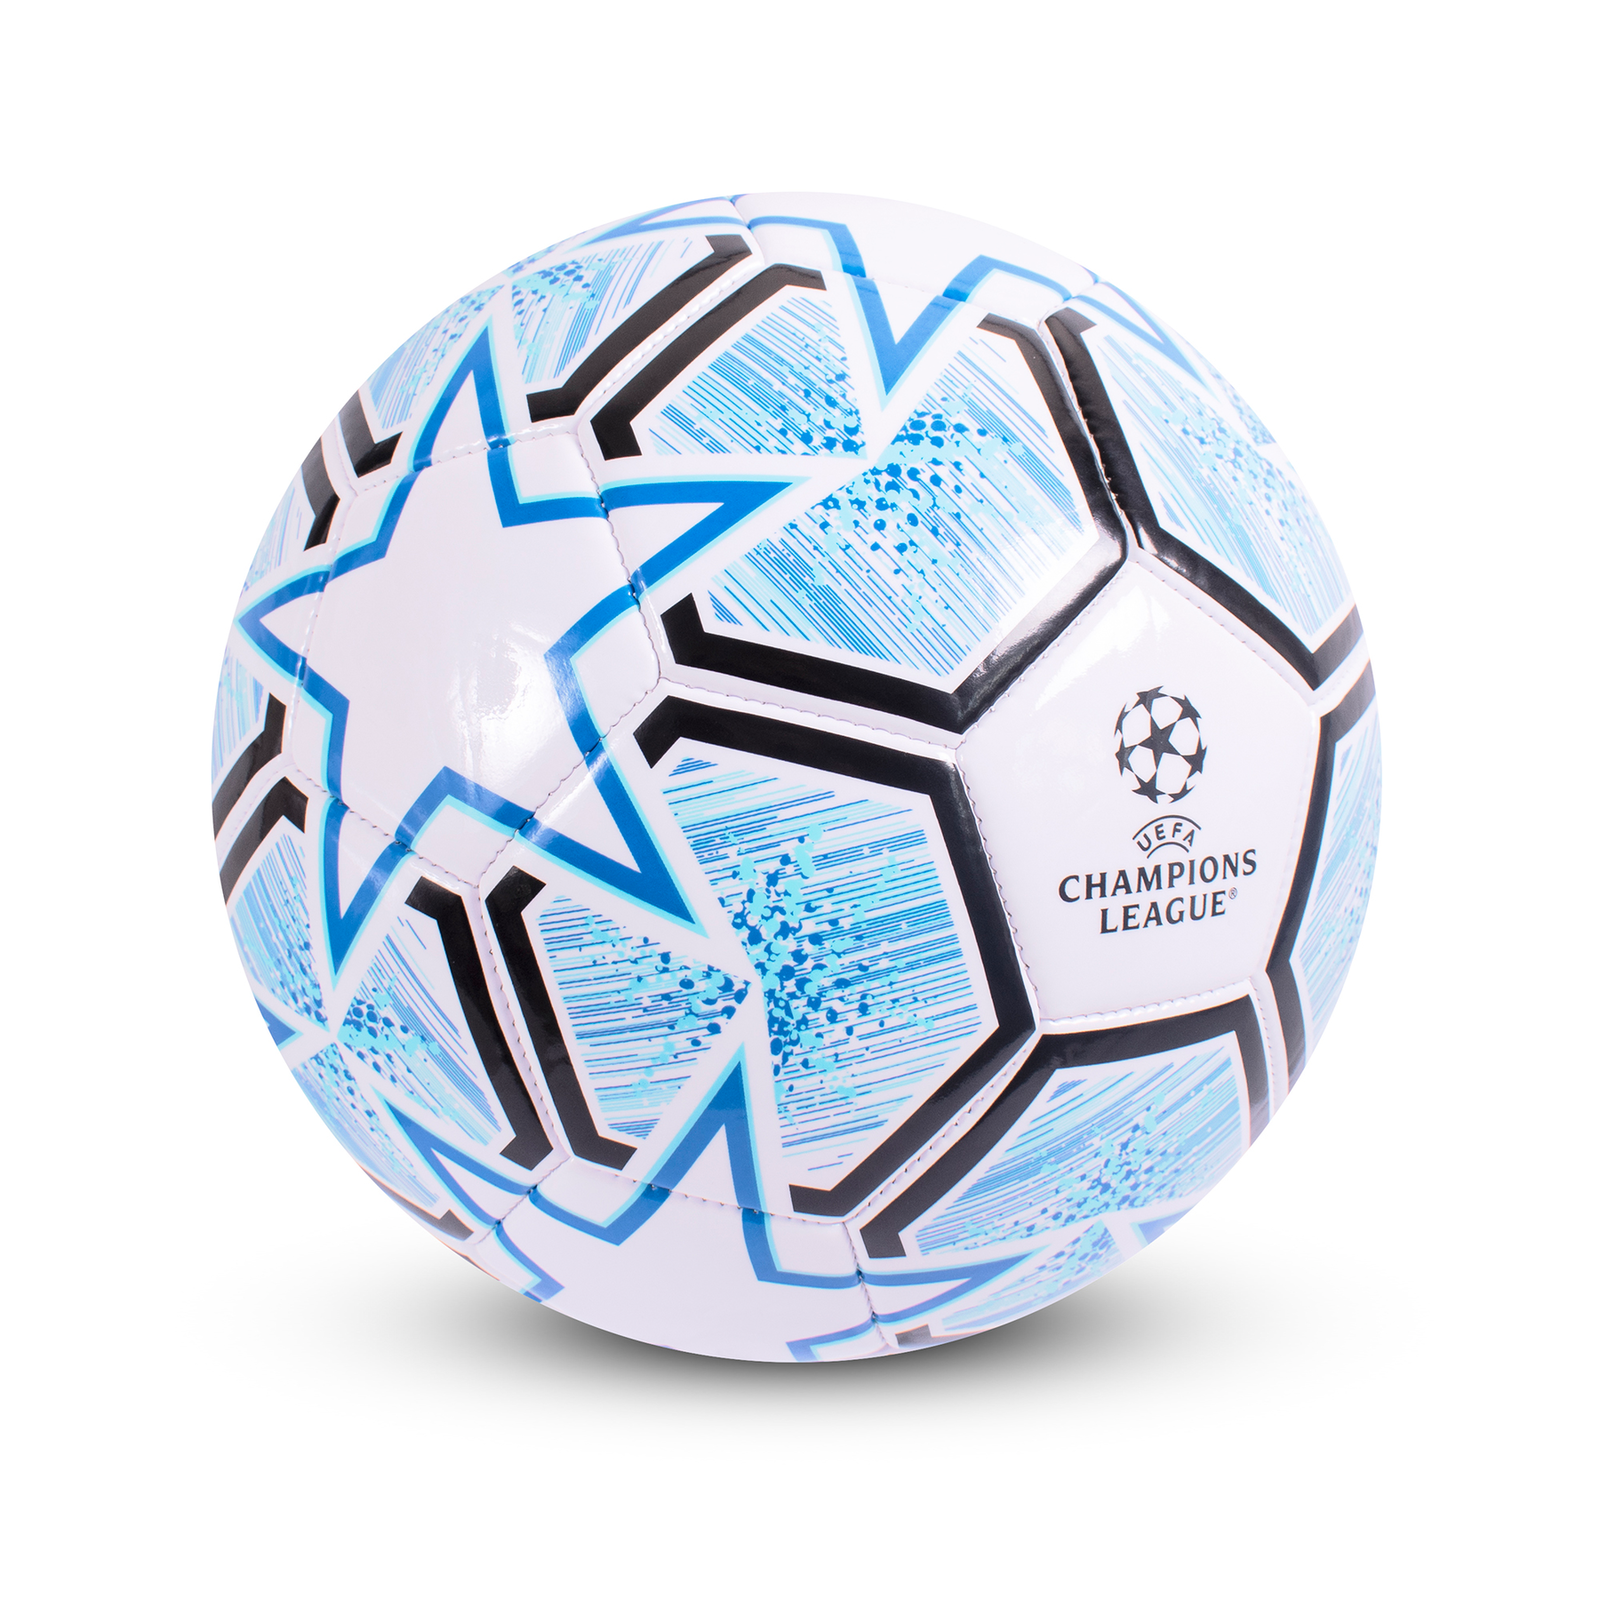 Manchester City Citizen Blue Soccer Ball - FutFanatics